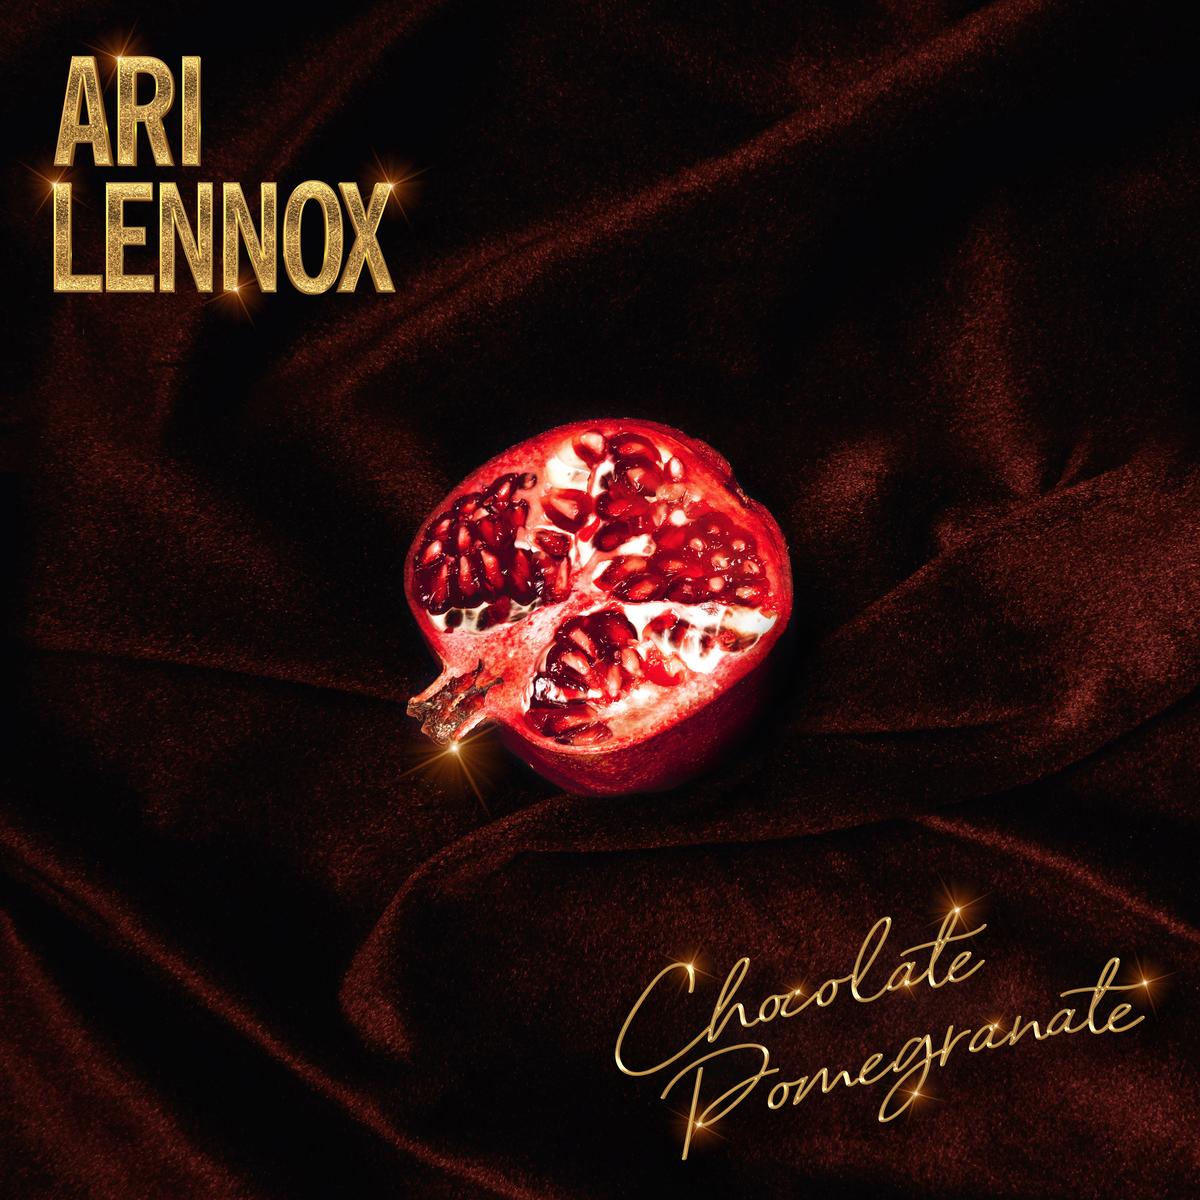 Ari Lennox – “Chocolate Pomegranate” [Audio]